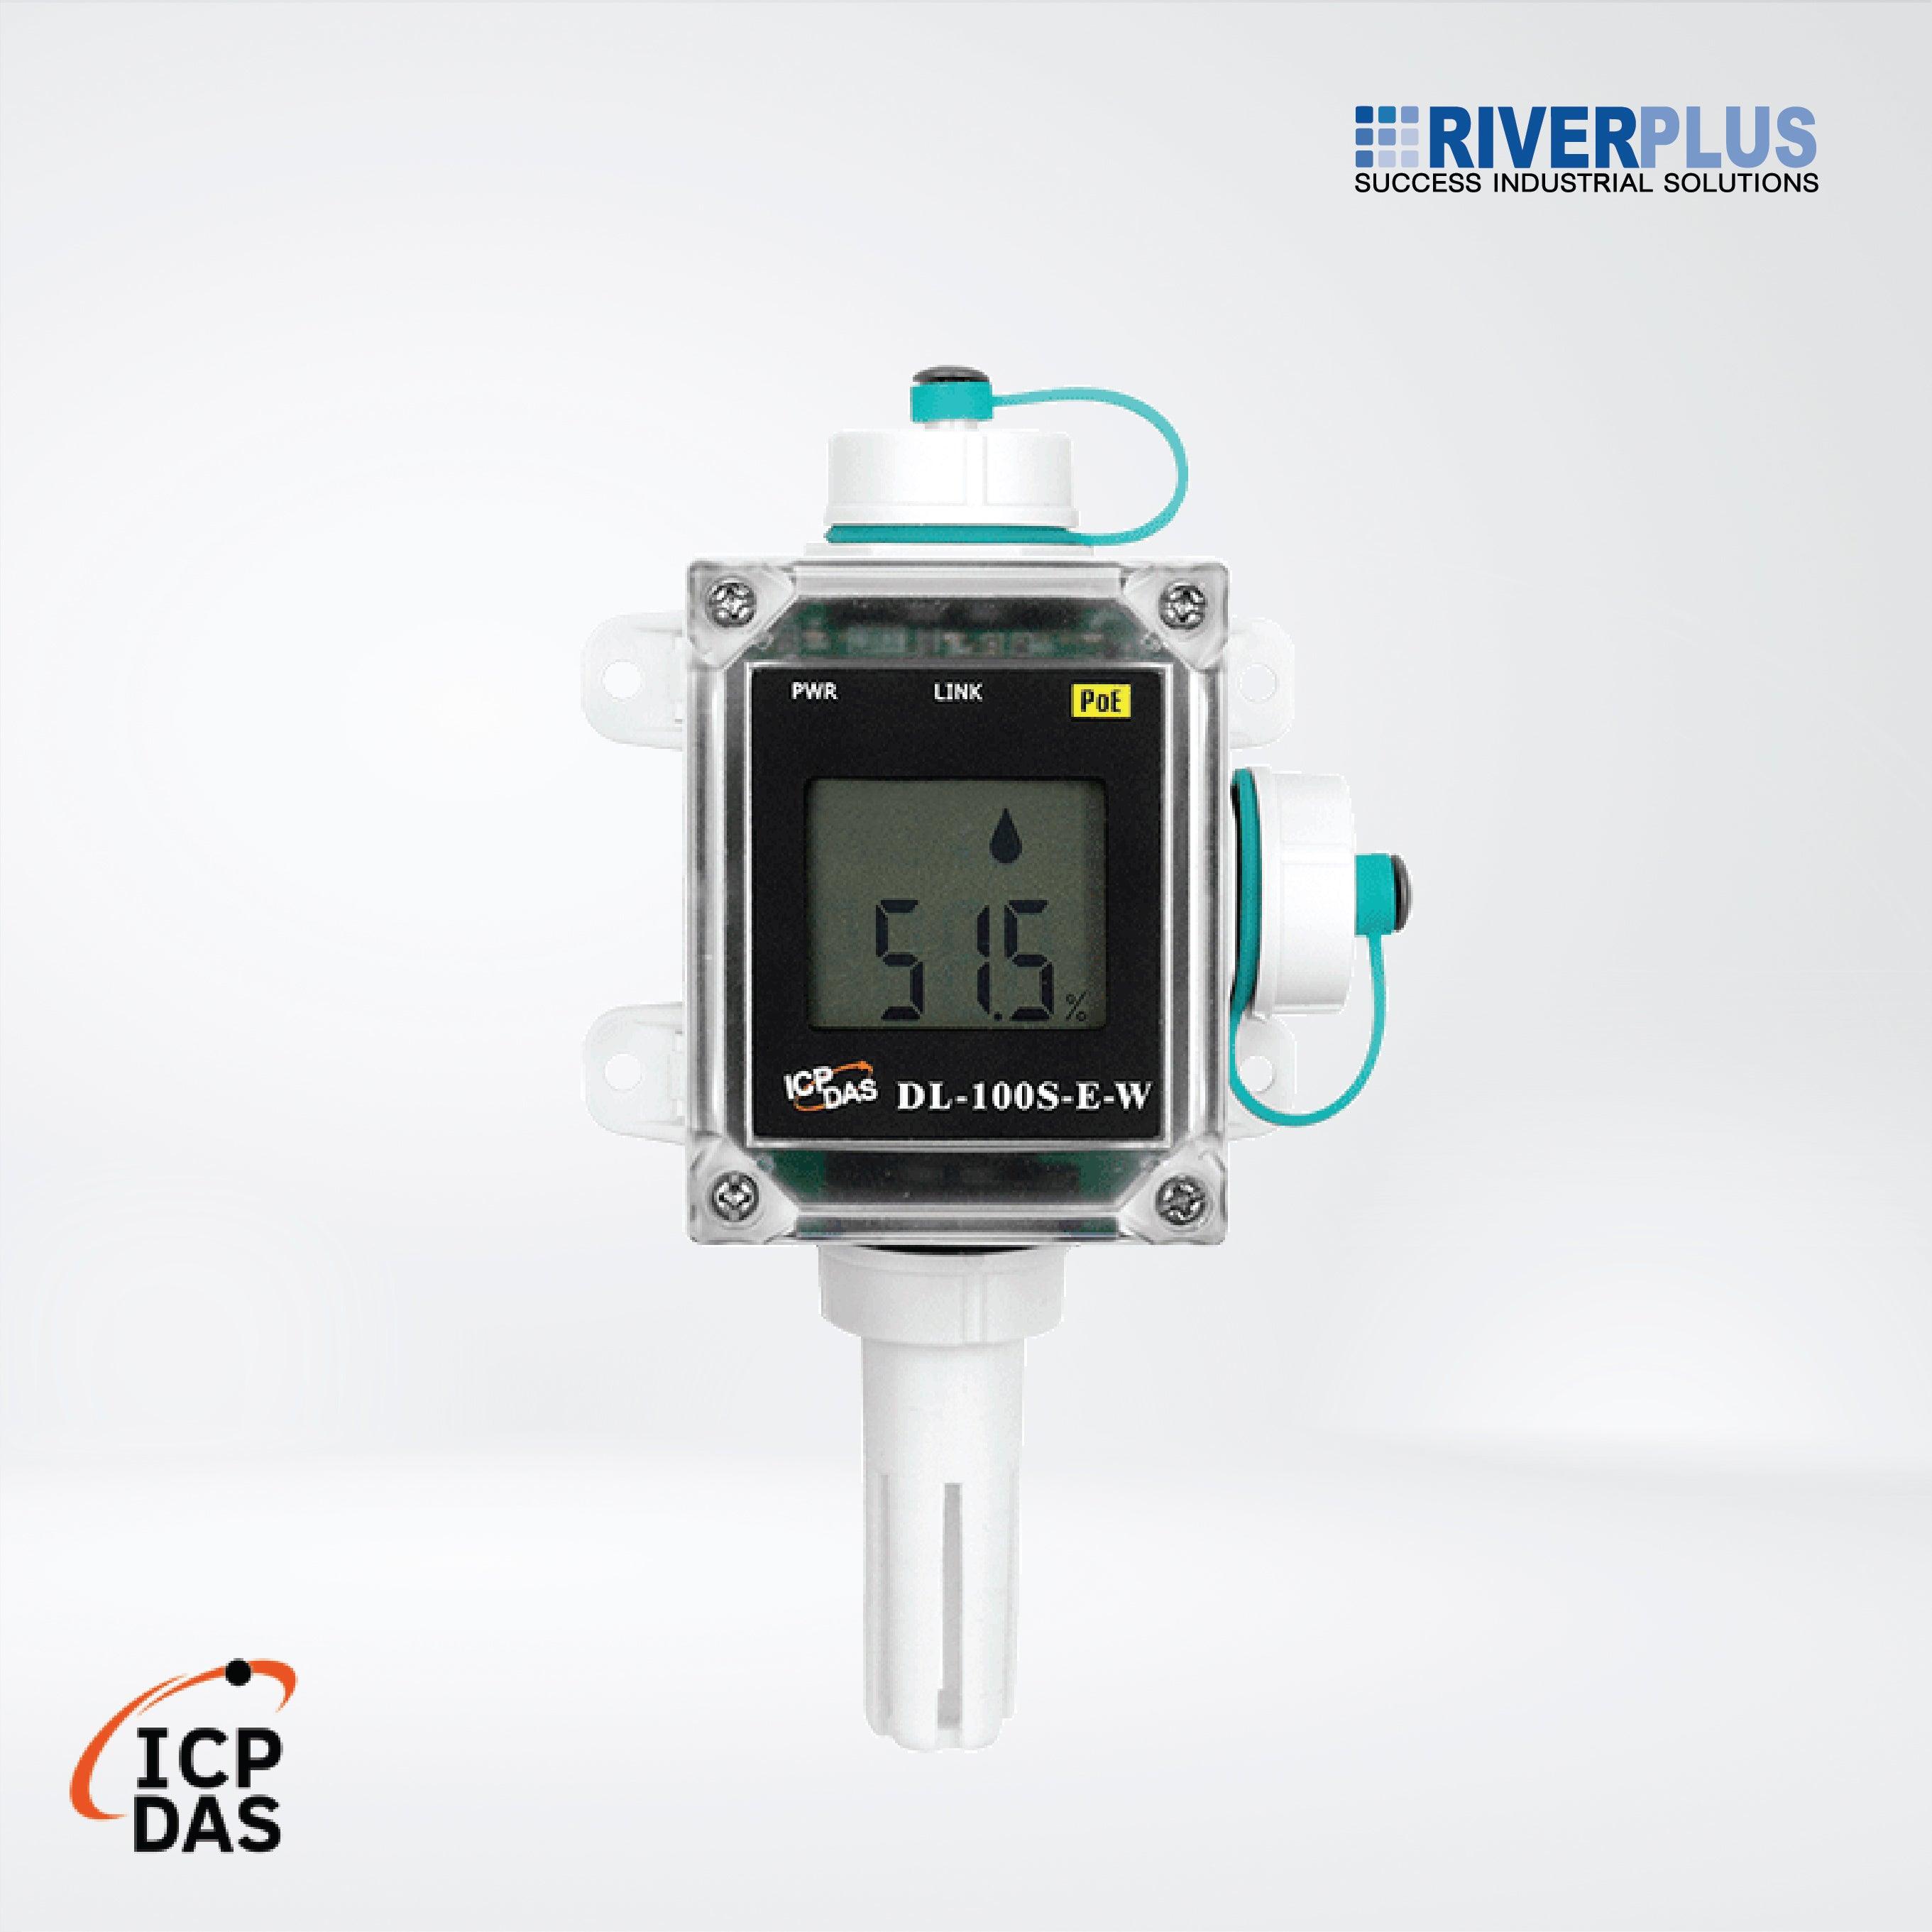 DL-100S-E-W IP66 Remote Temperature and Humidity Data Logger - Riverplus